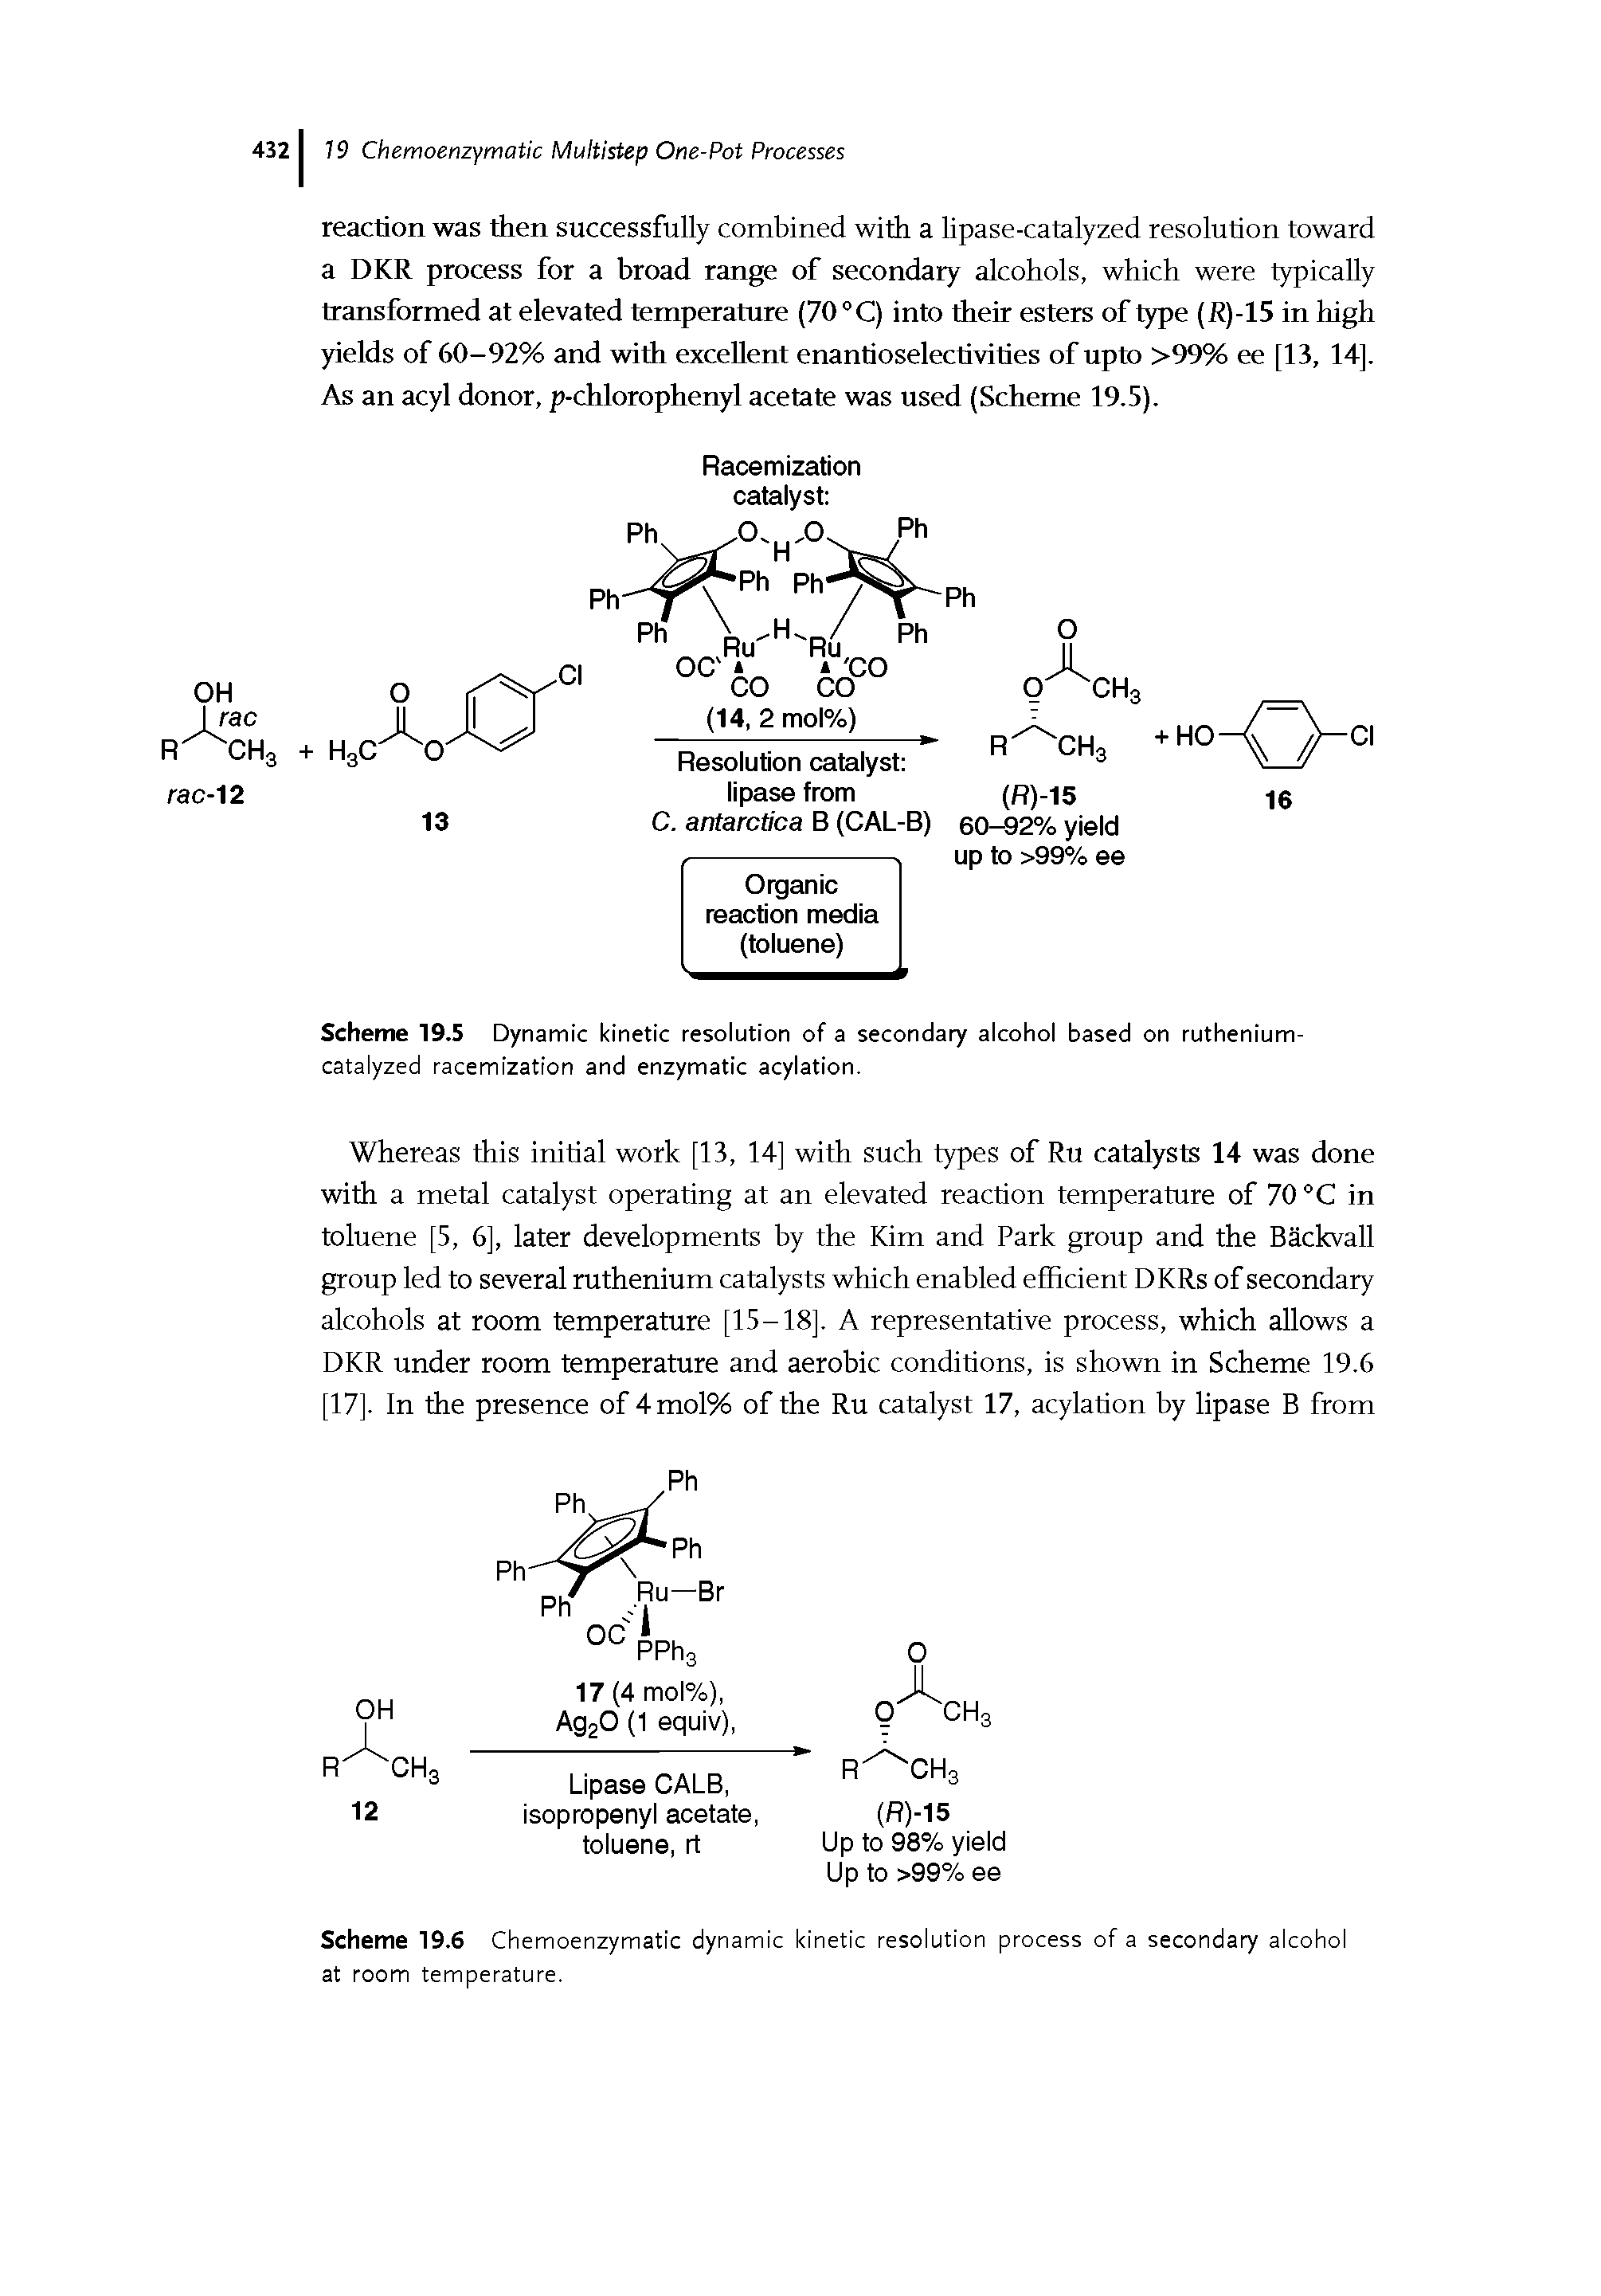 Scheme 19.5 Dynamic kinetic resolution of a secondary alcohol based on ruthenium-catalyzed racemization and enzymatic acylation.